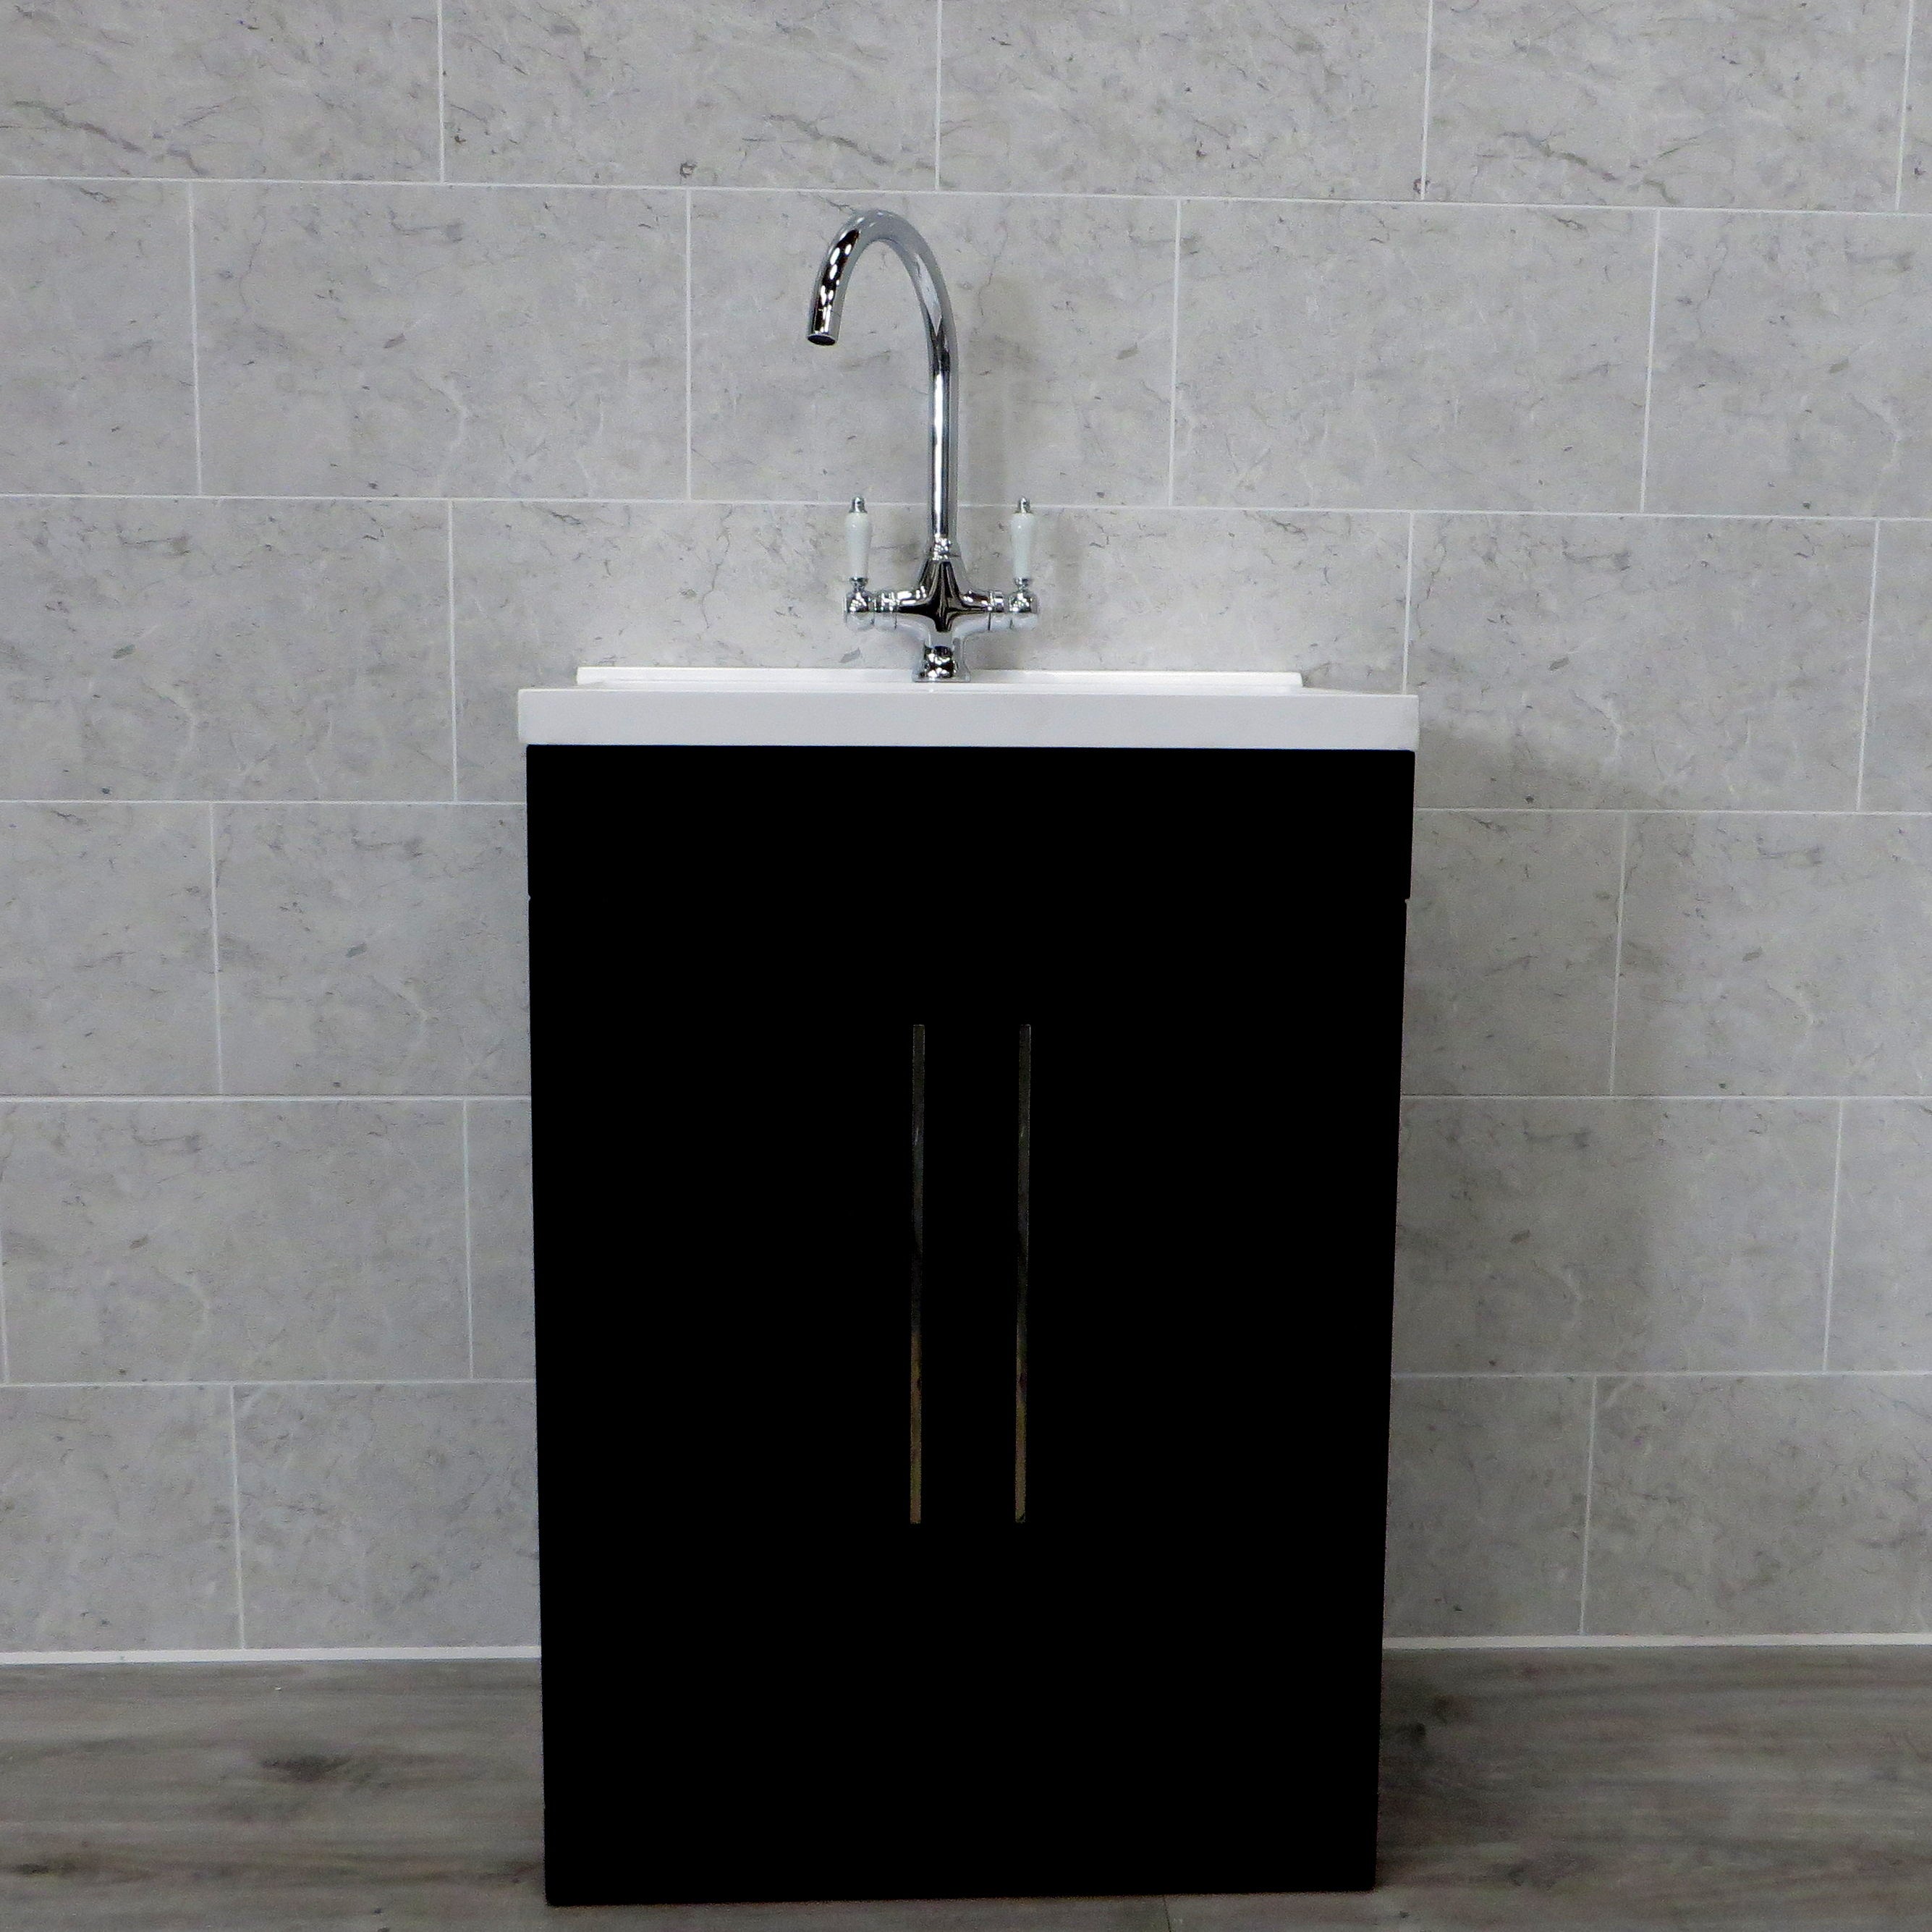 Sample of White Alabaster Tile Groove 8mm Bathroom Cladding Wet Wall Panels - 0